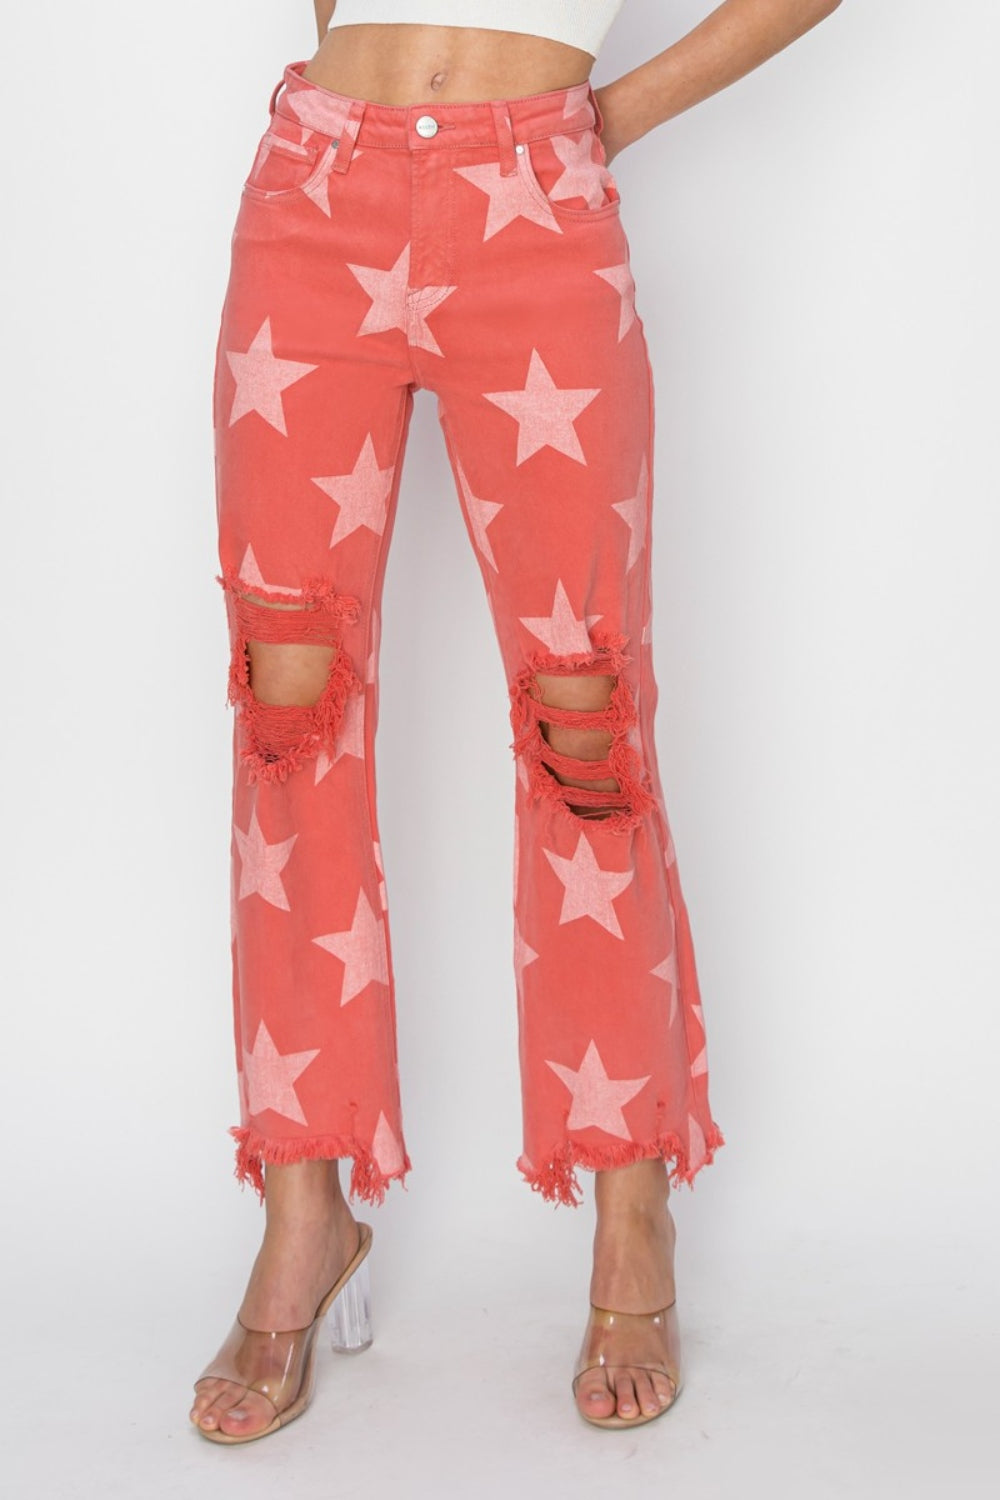 RISEN High Rise Star Print Jeans - Peach Blossom - Inspired Eye Boutique